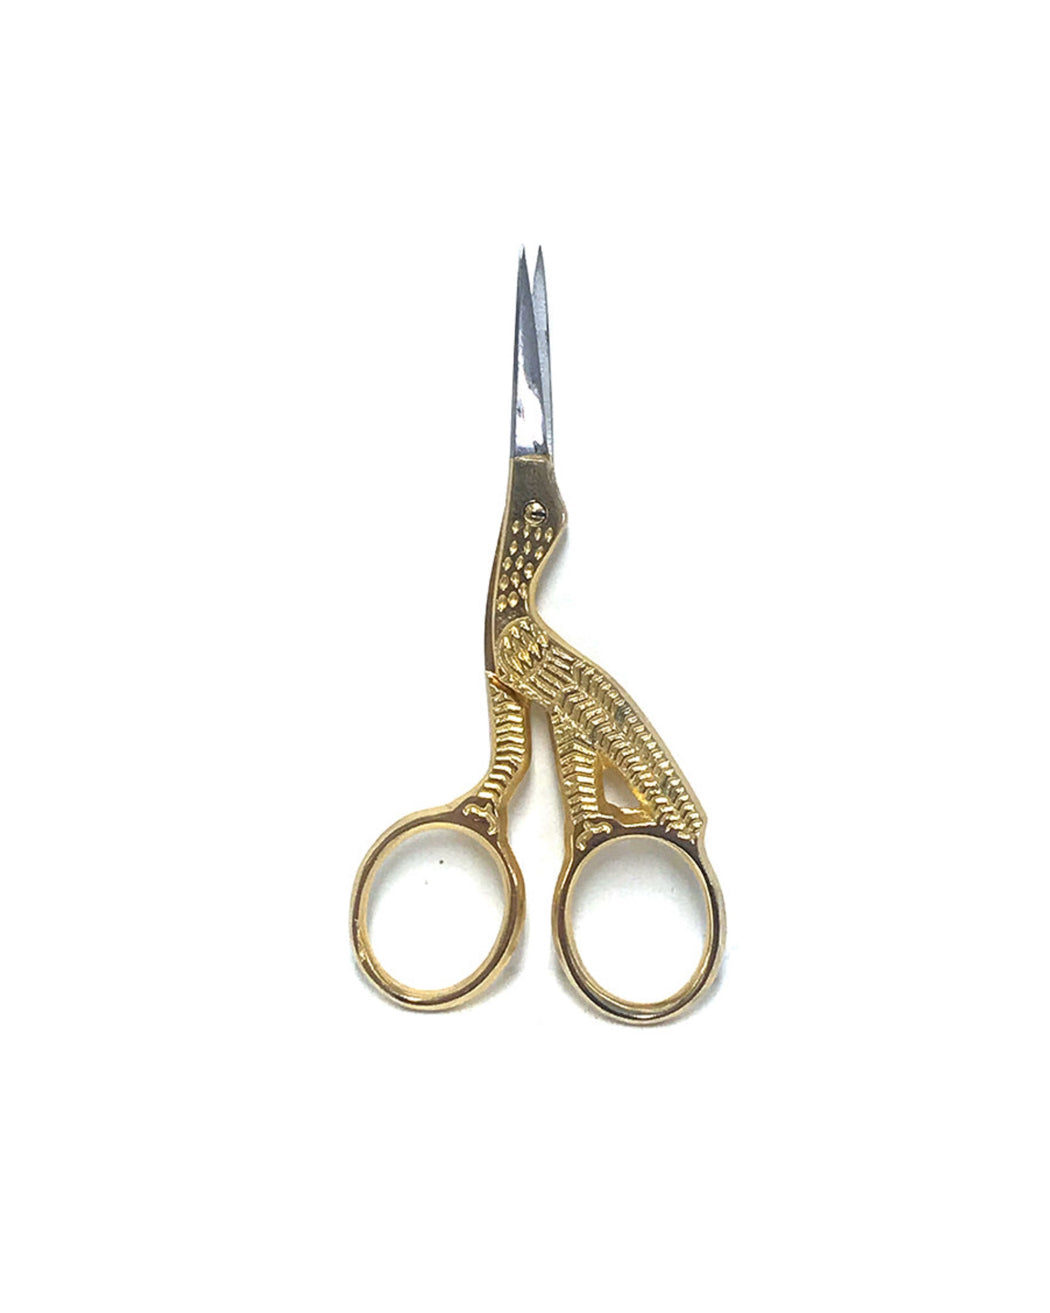 Stork Embroidery Scissors 3.5" - Zipper and Thread